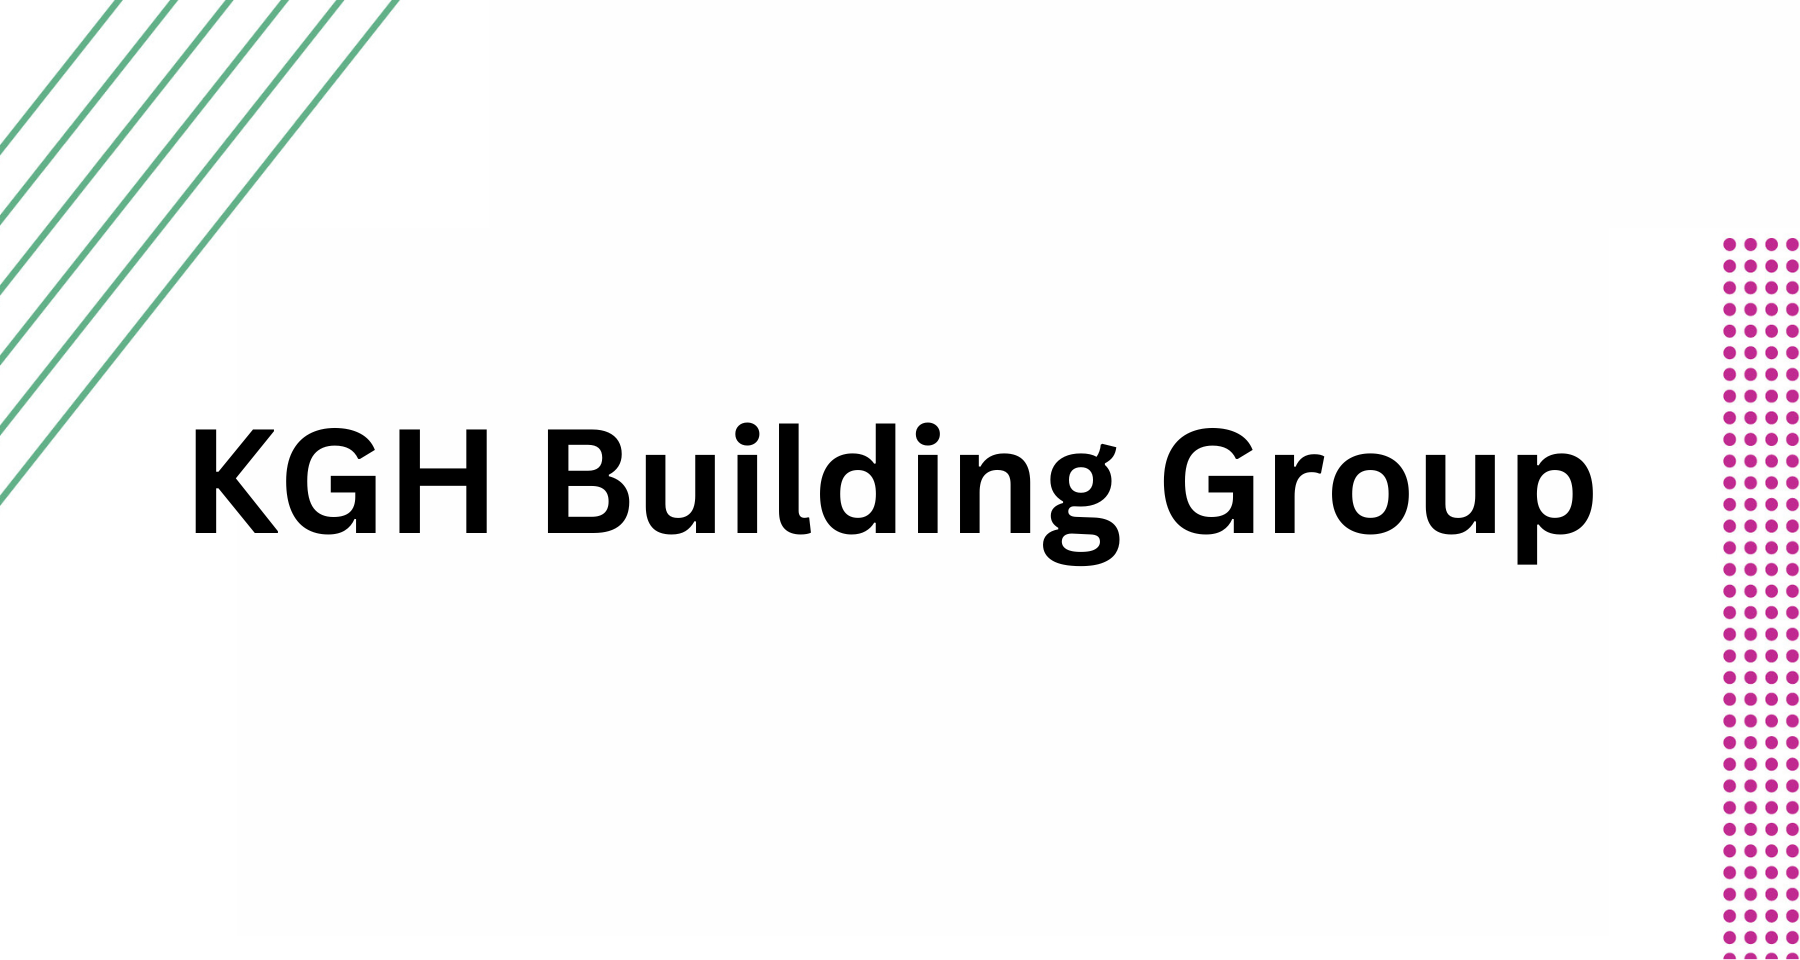 KGH Building Group